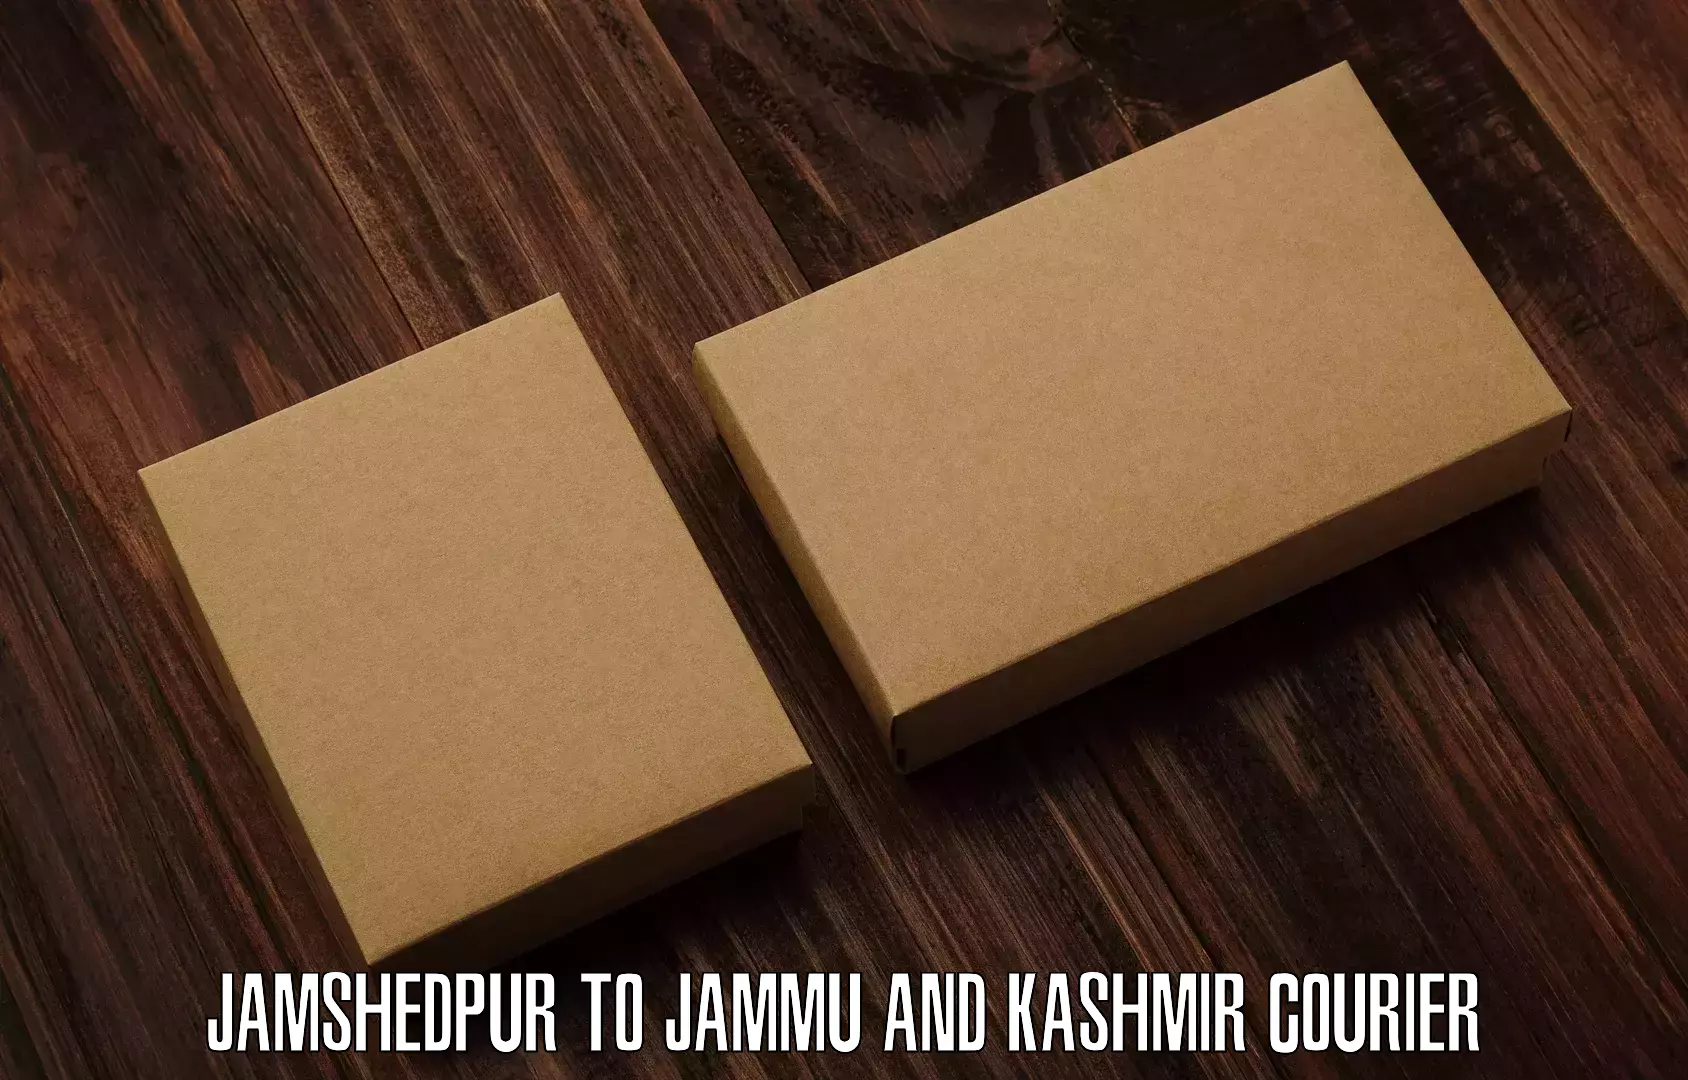 Automated parcel services Jamshedpur to Shopian